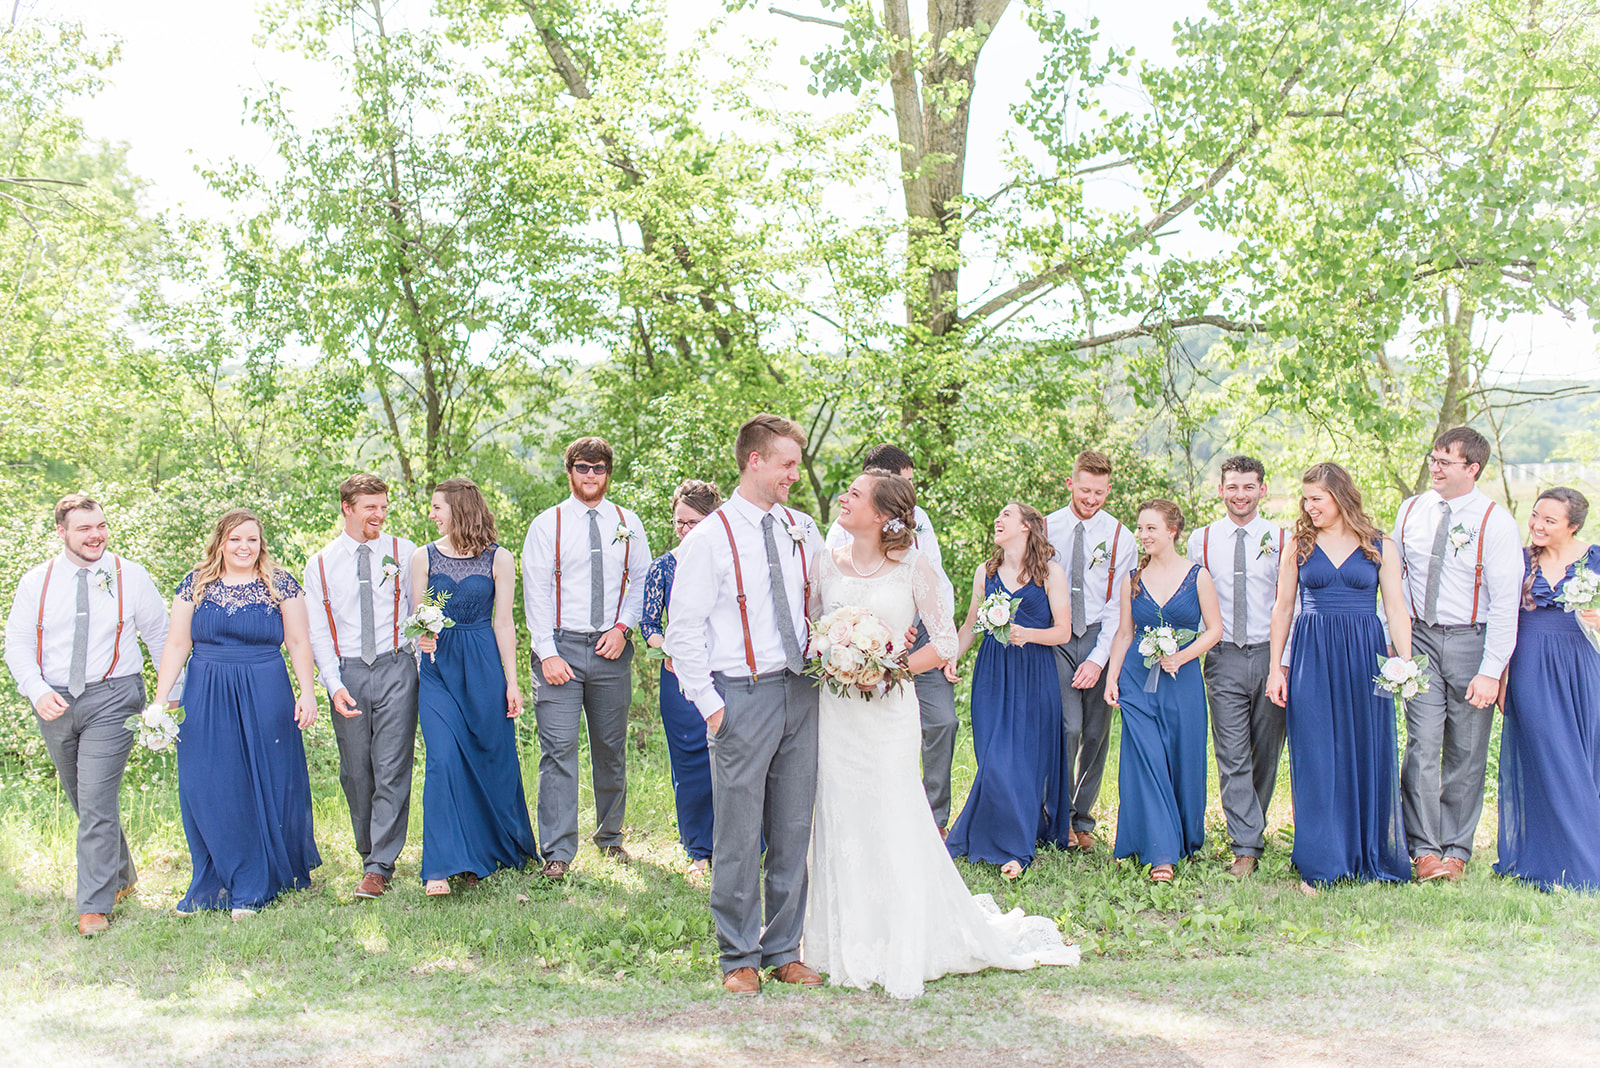 A Coffee Mill Ski Area Outdoor Summer Minnesota Wedding - The Overwhelmed Bride Wedding Blog